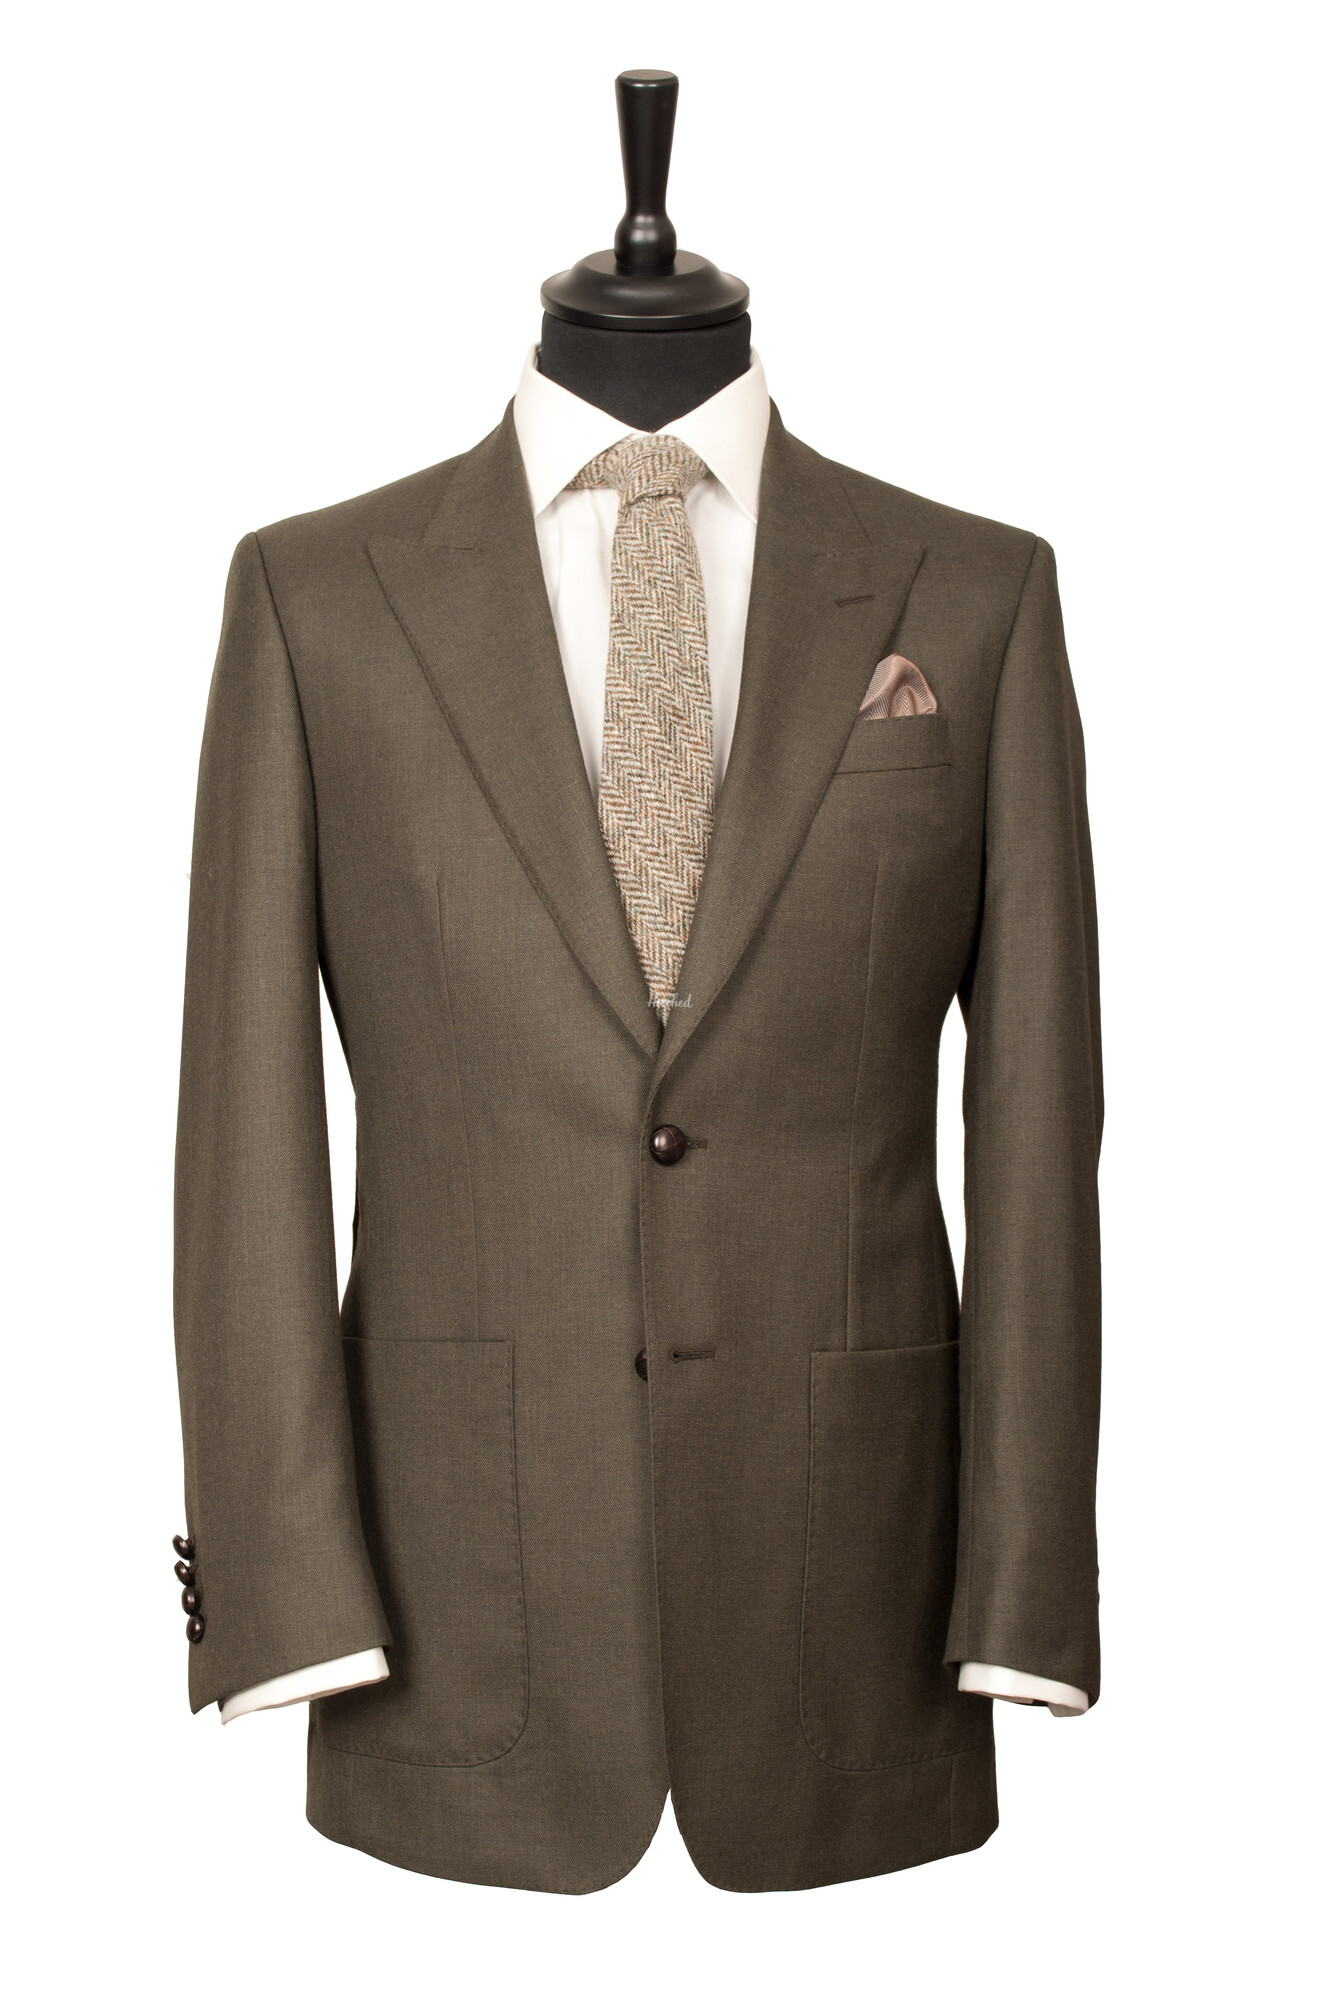 King & Allen Suit 1 Mens Wedding Suit from King & Allen - hitched.co.uk